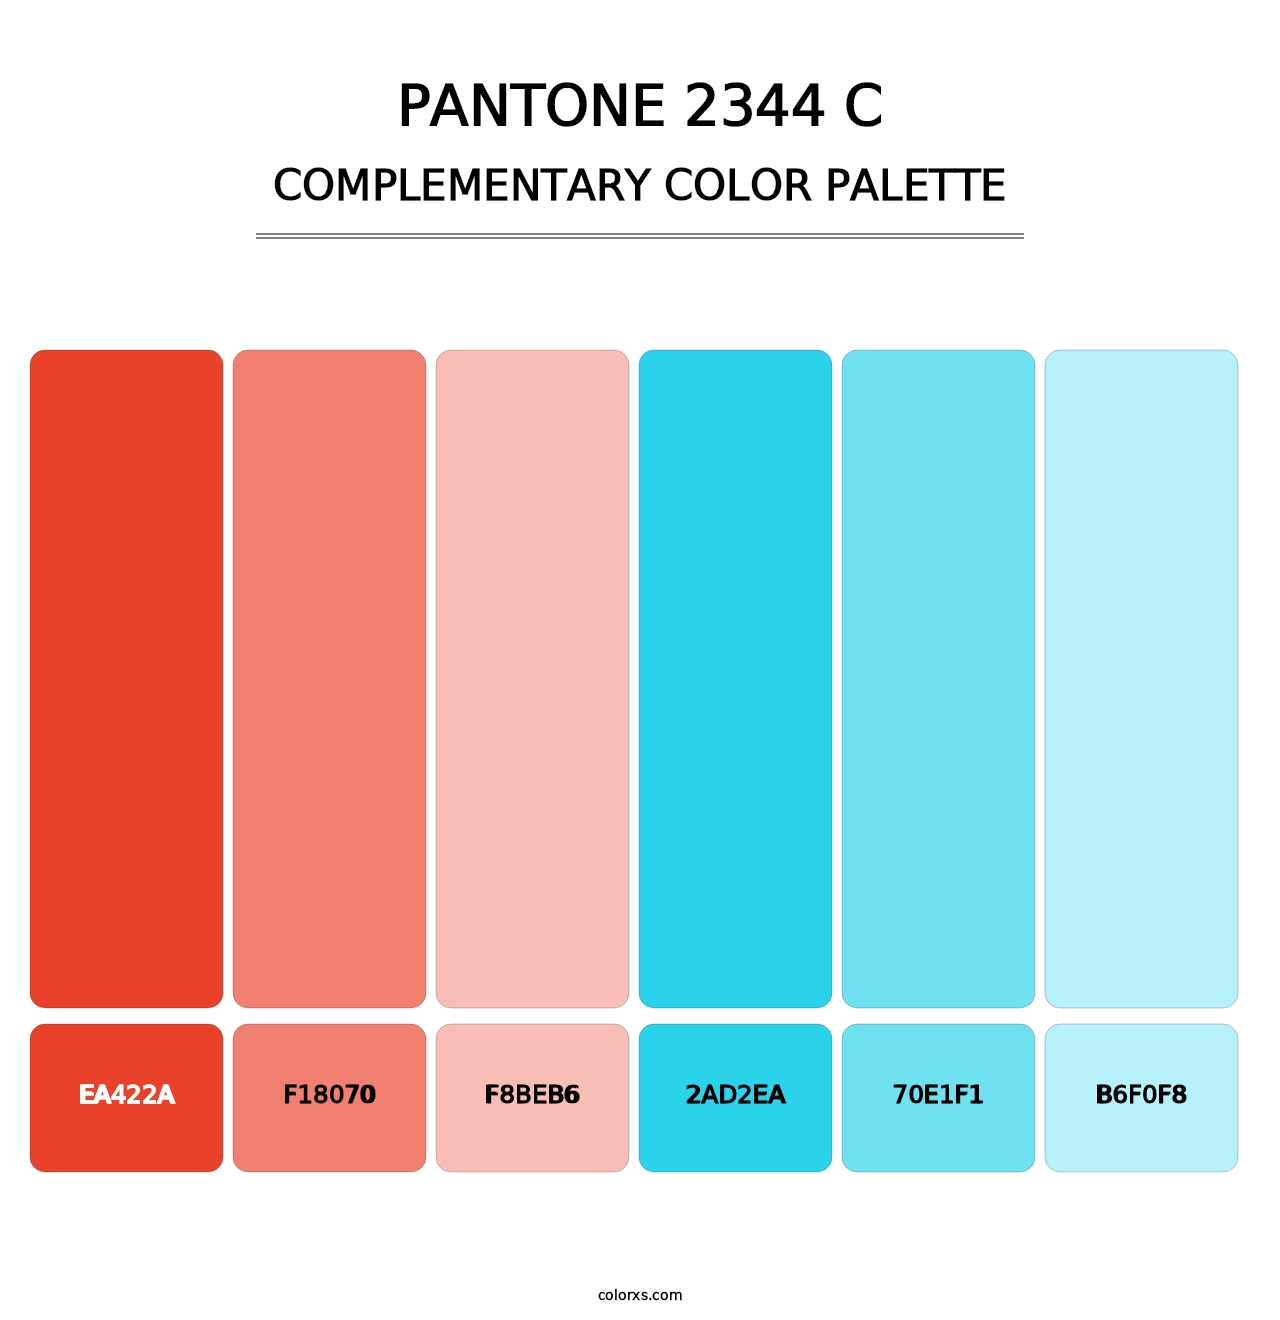 PANTONE 2344 C - Complementary Color Palette